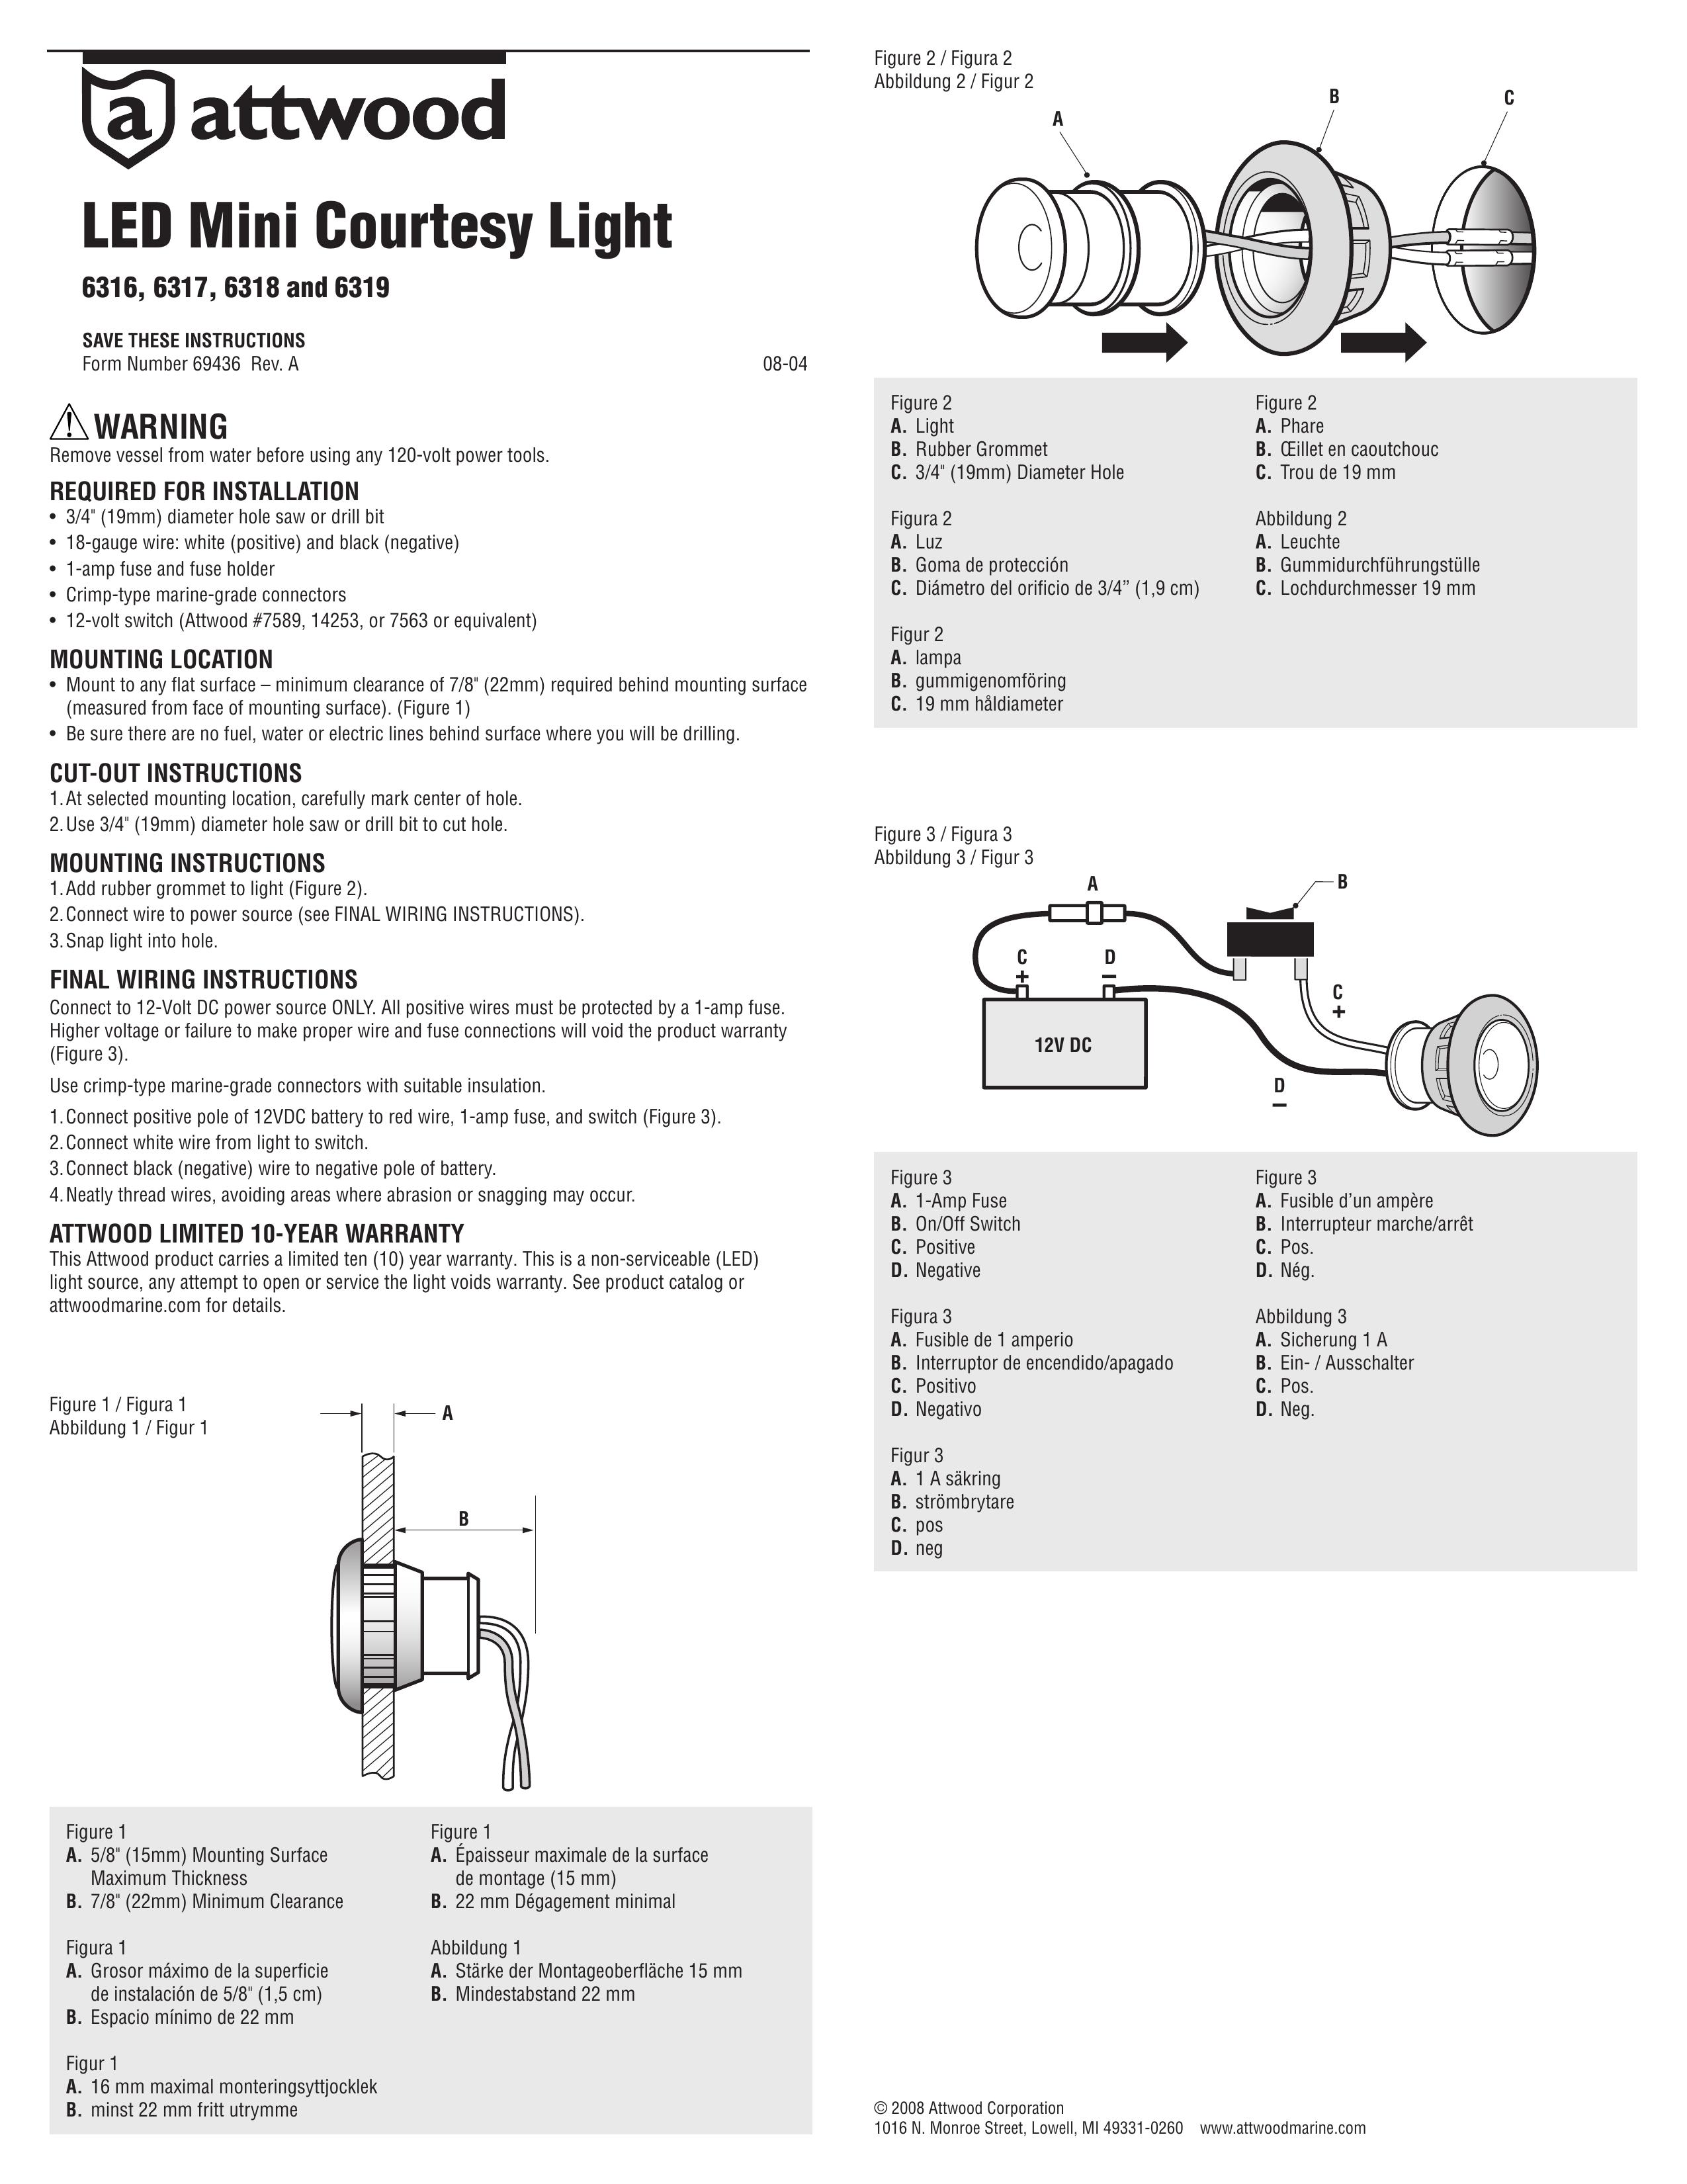 Attwood 6319 Marine Lighting User Manual